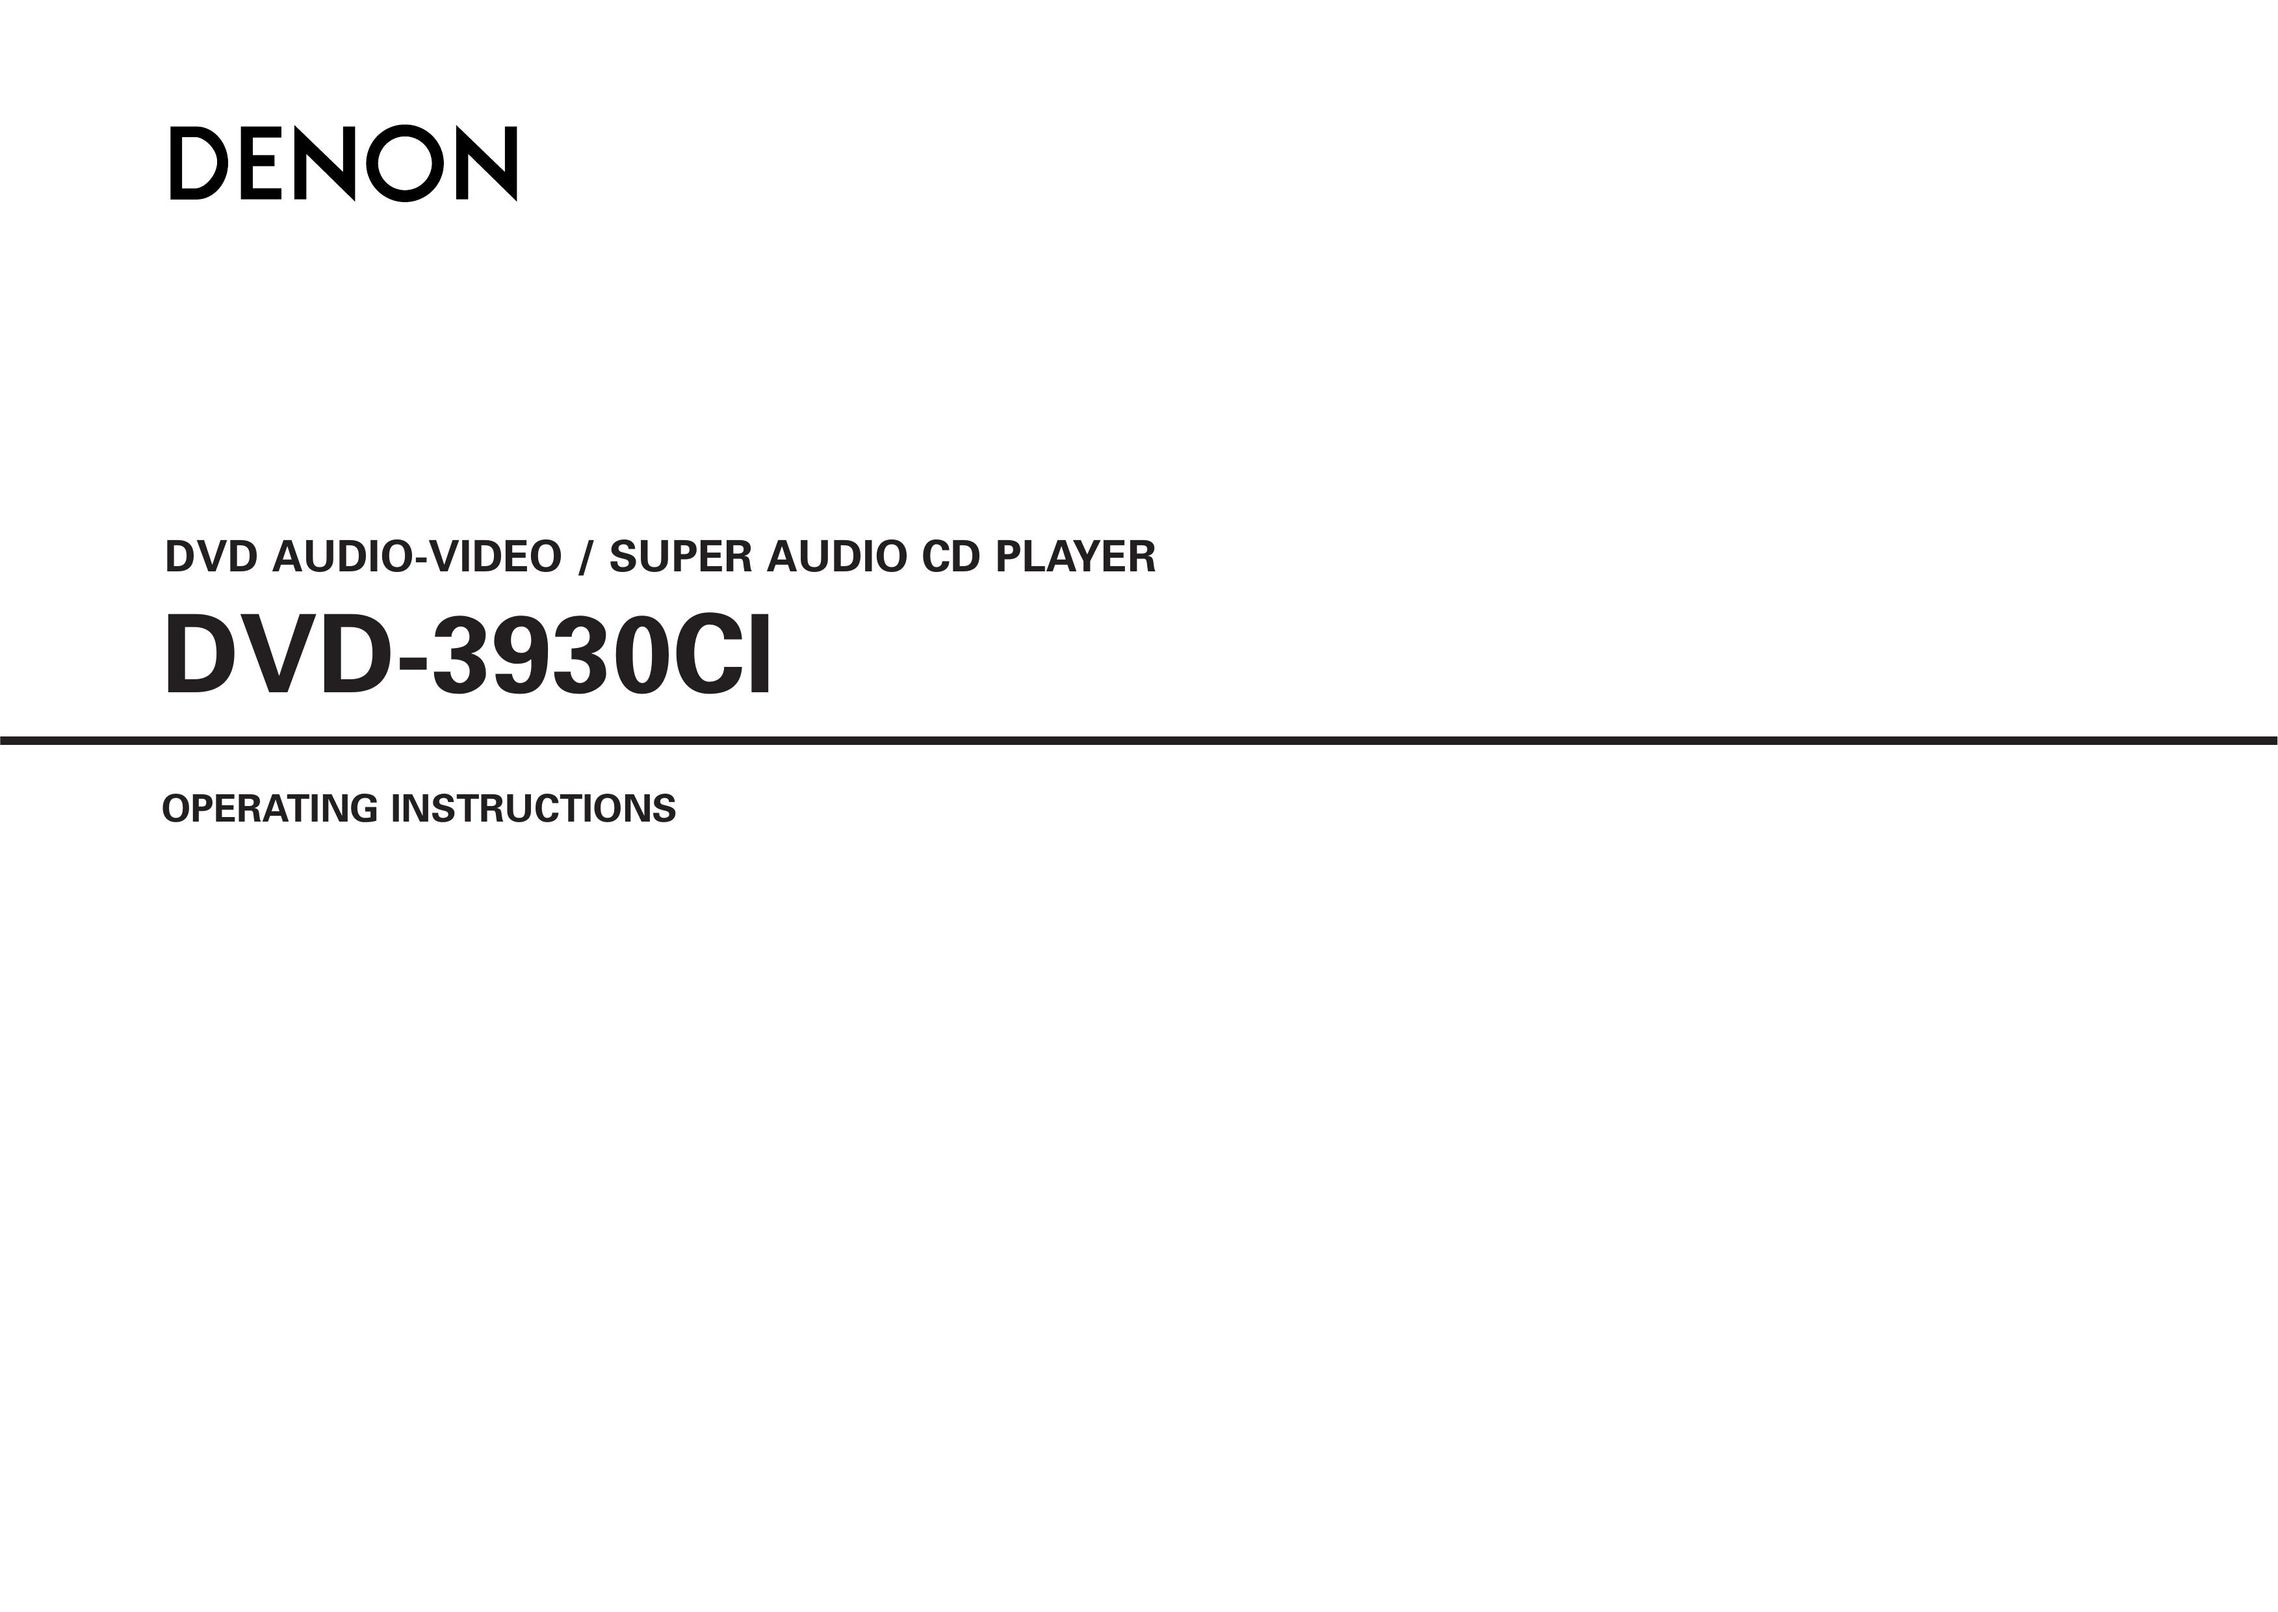 Denon DVD-3930CI DVD Player User Manual